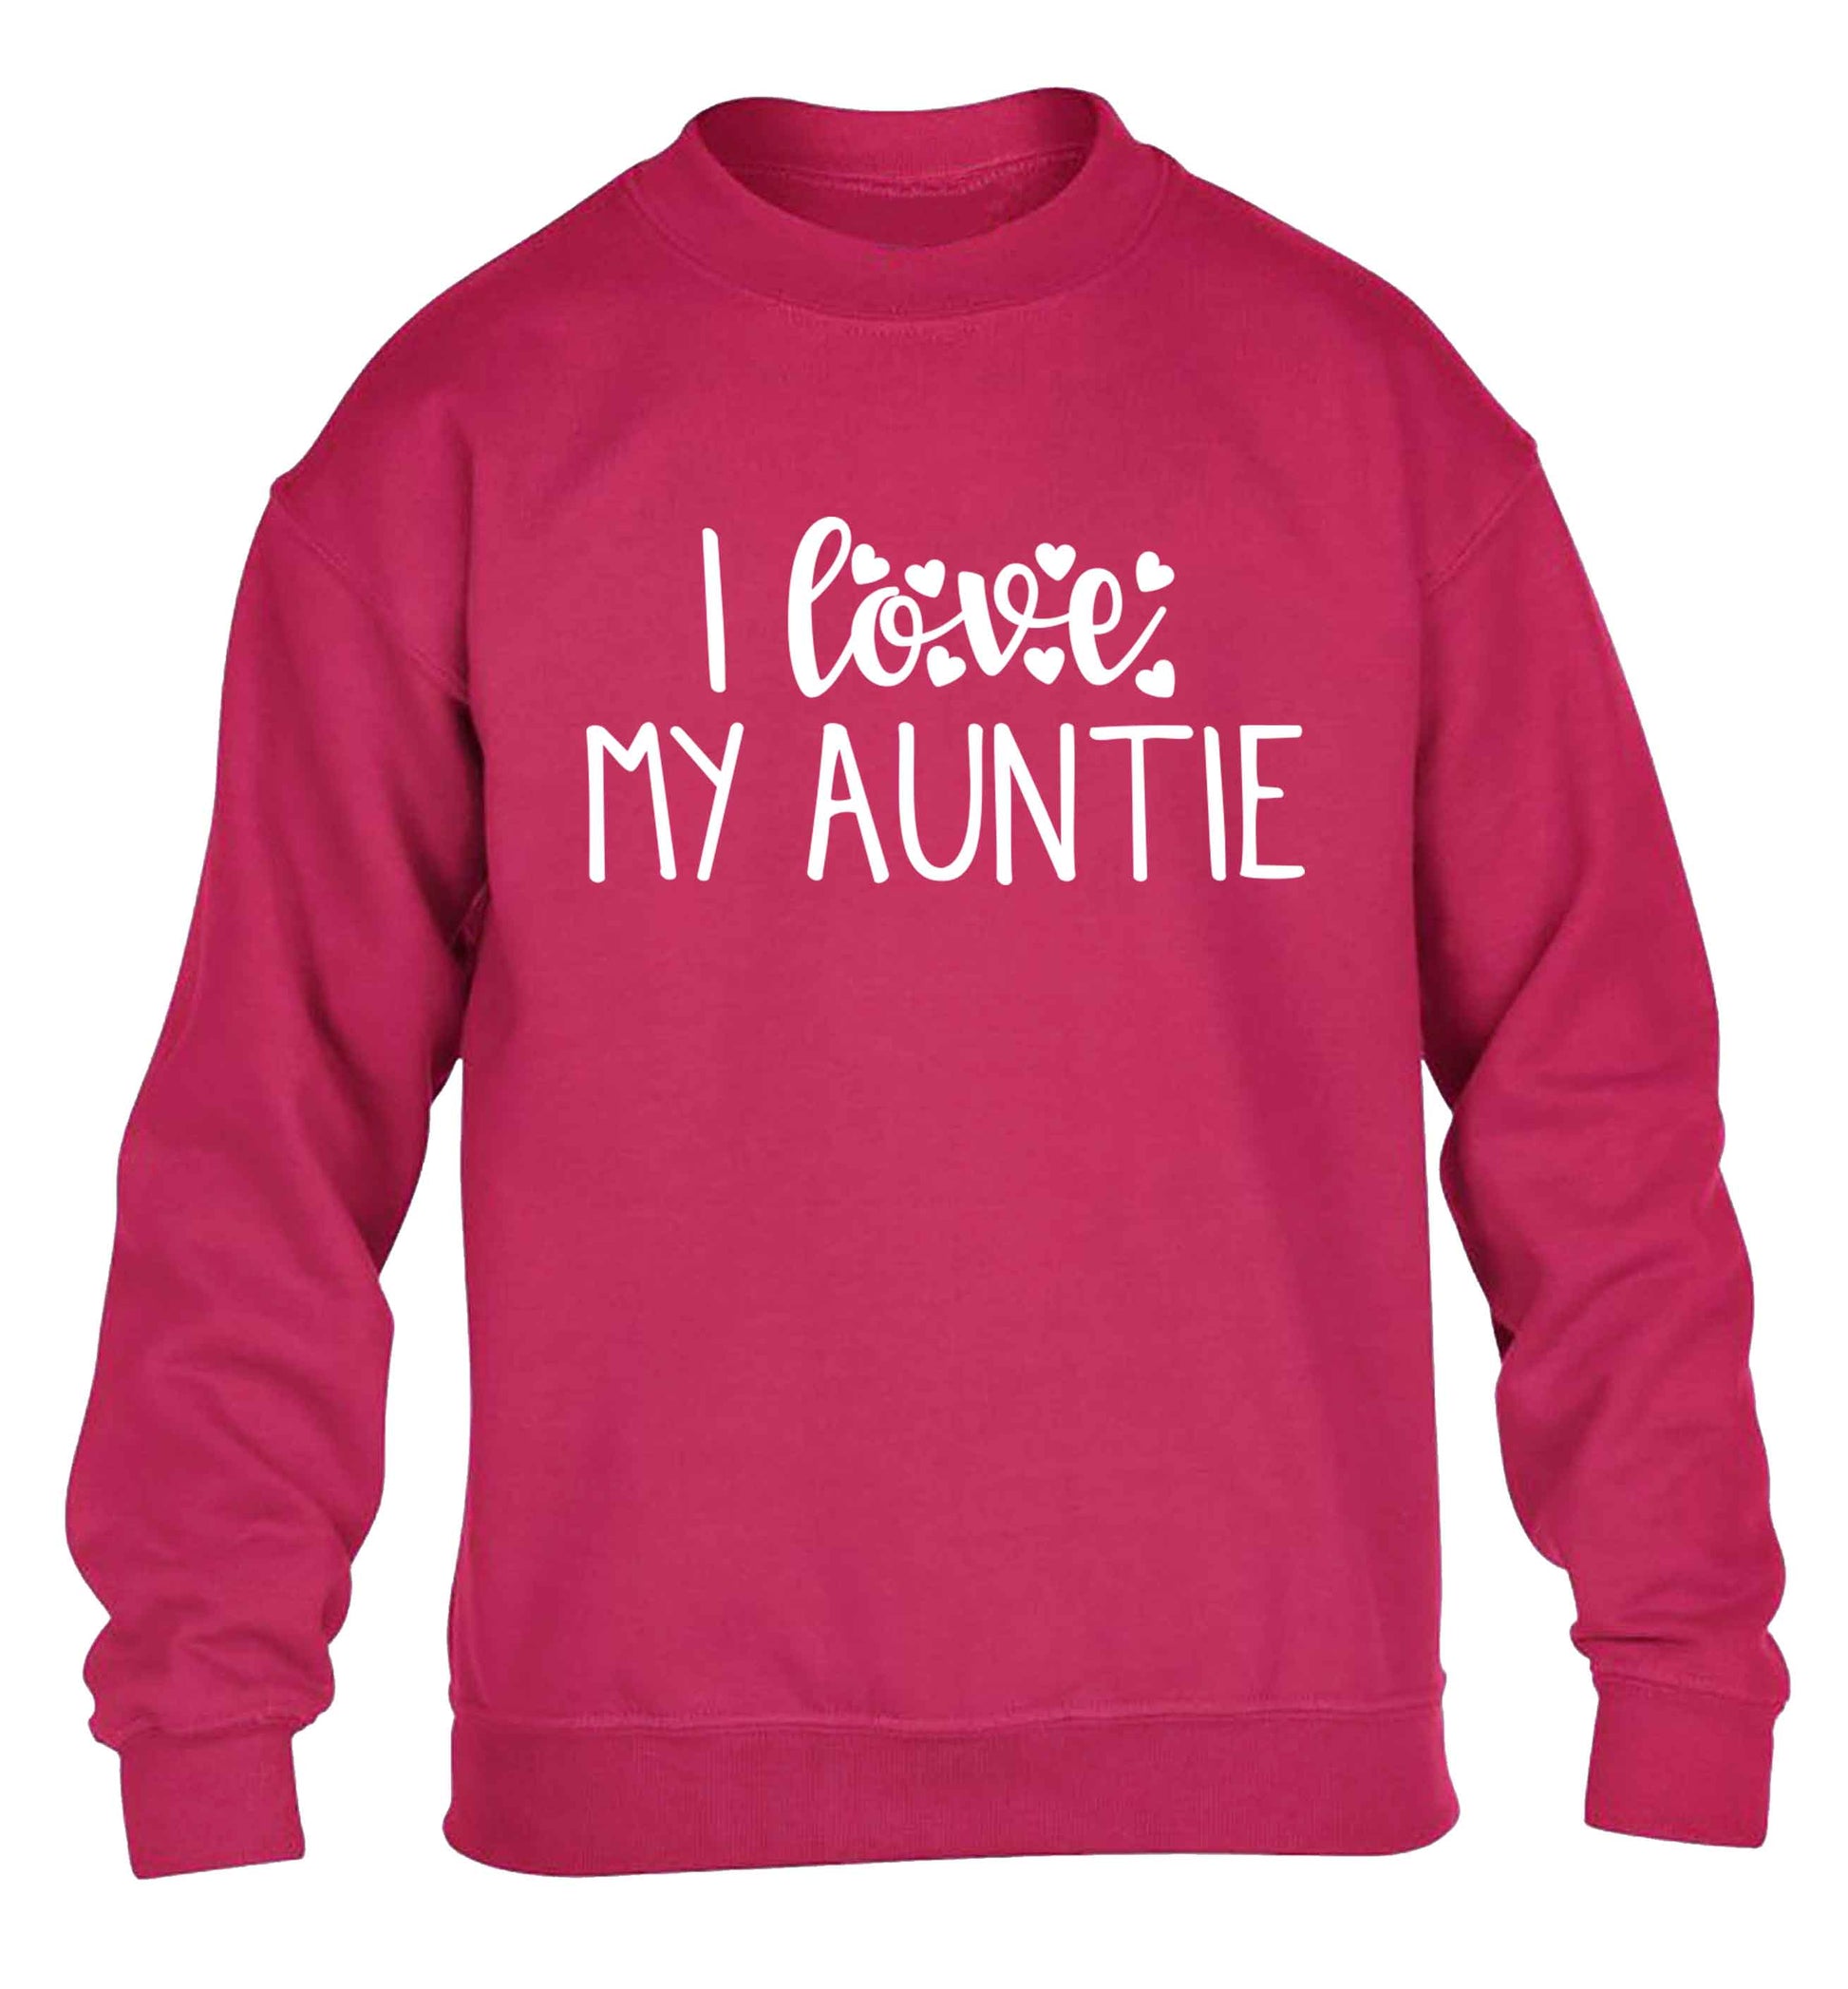 I love my auntie children's pink sweater 12-13 Years